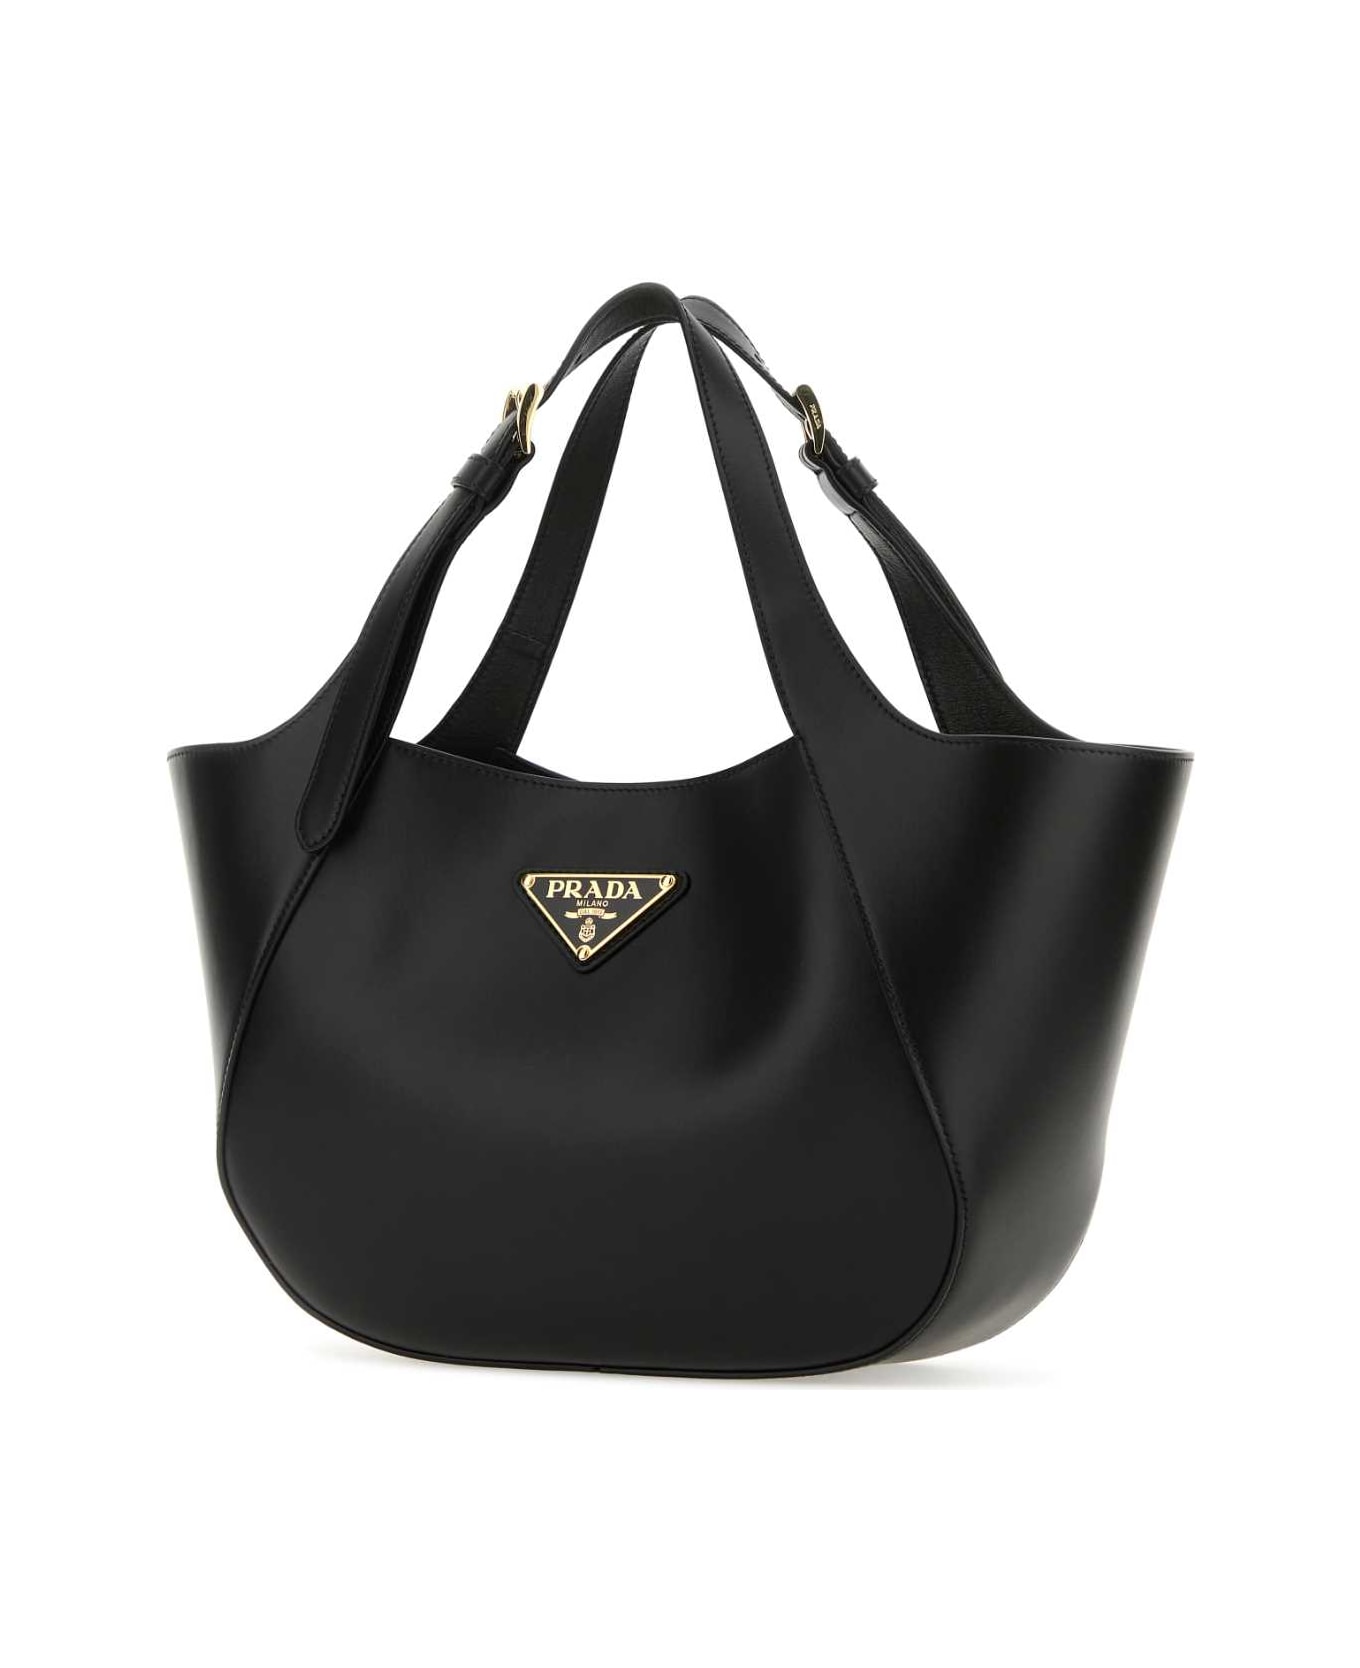 Prada Black Leather Handbag - NERO